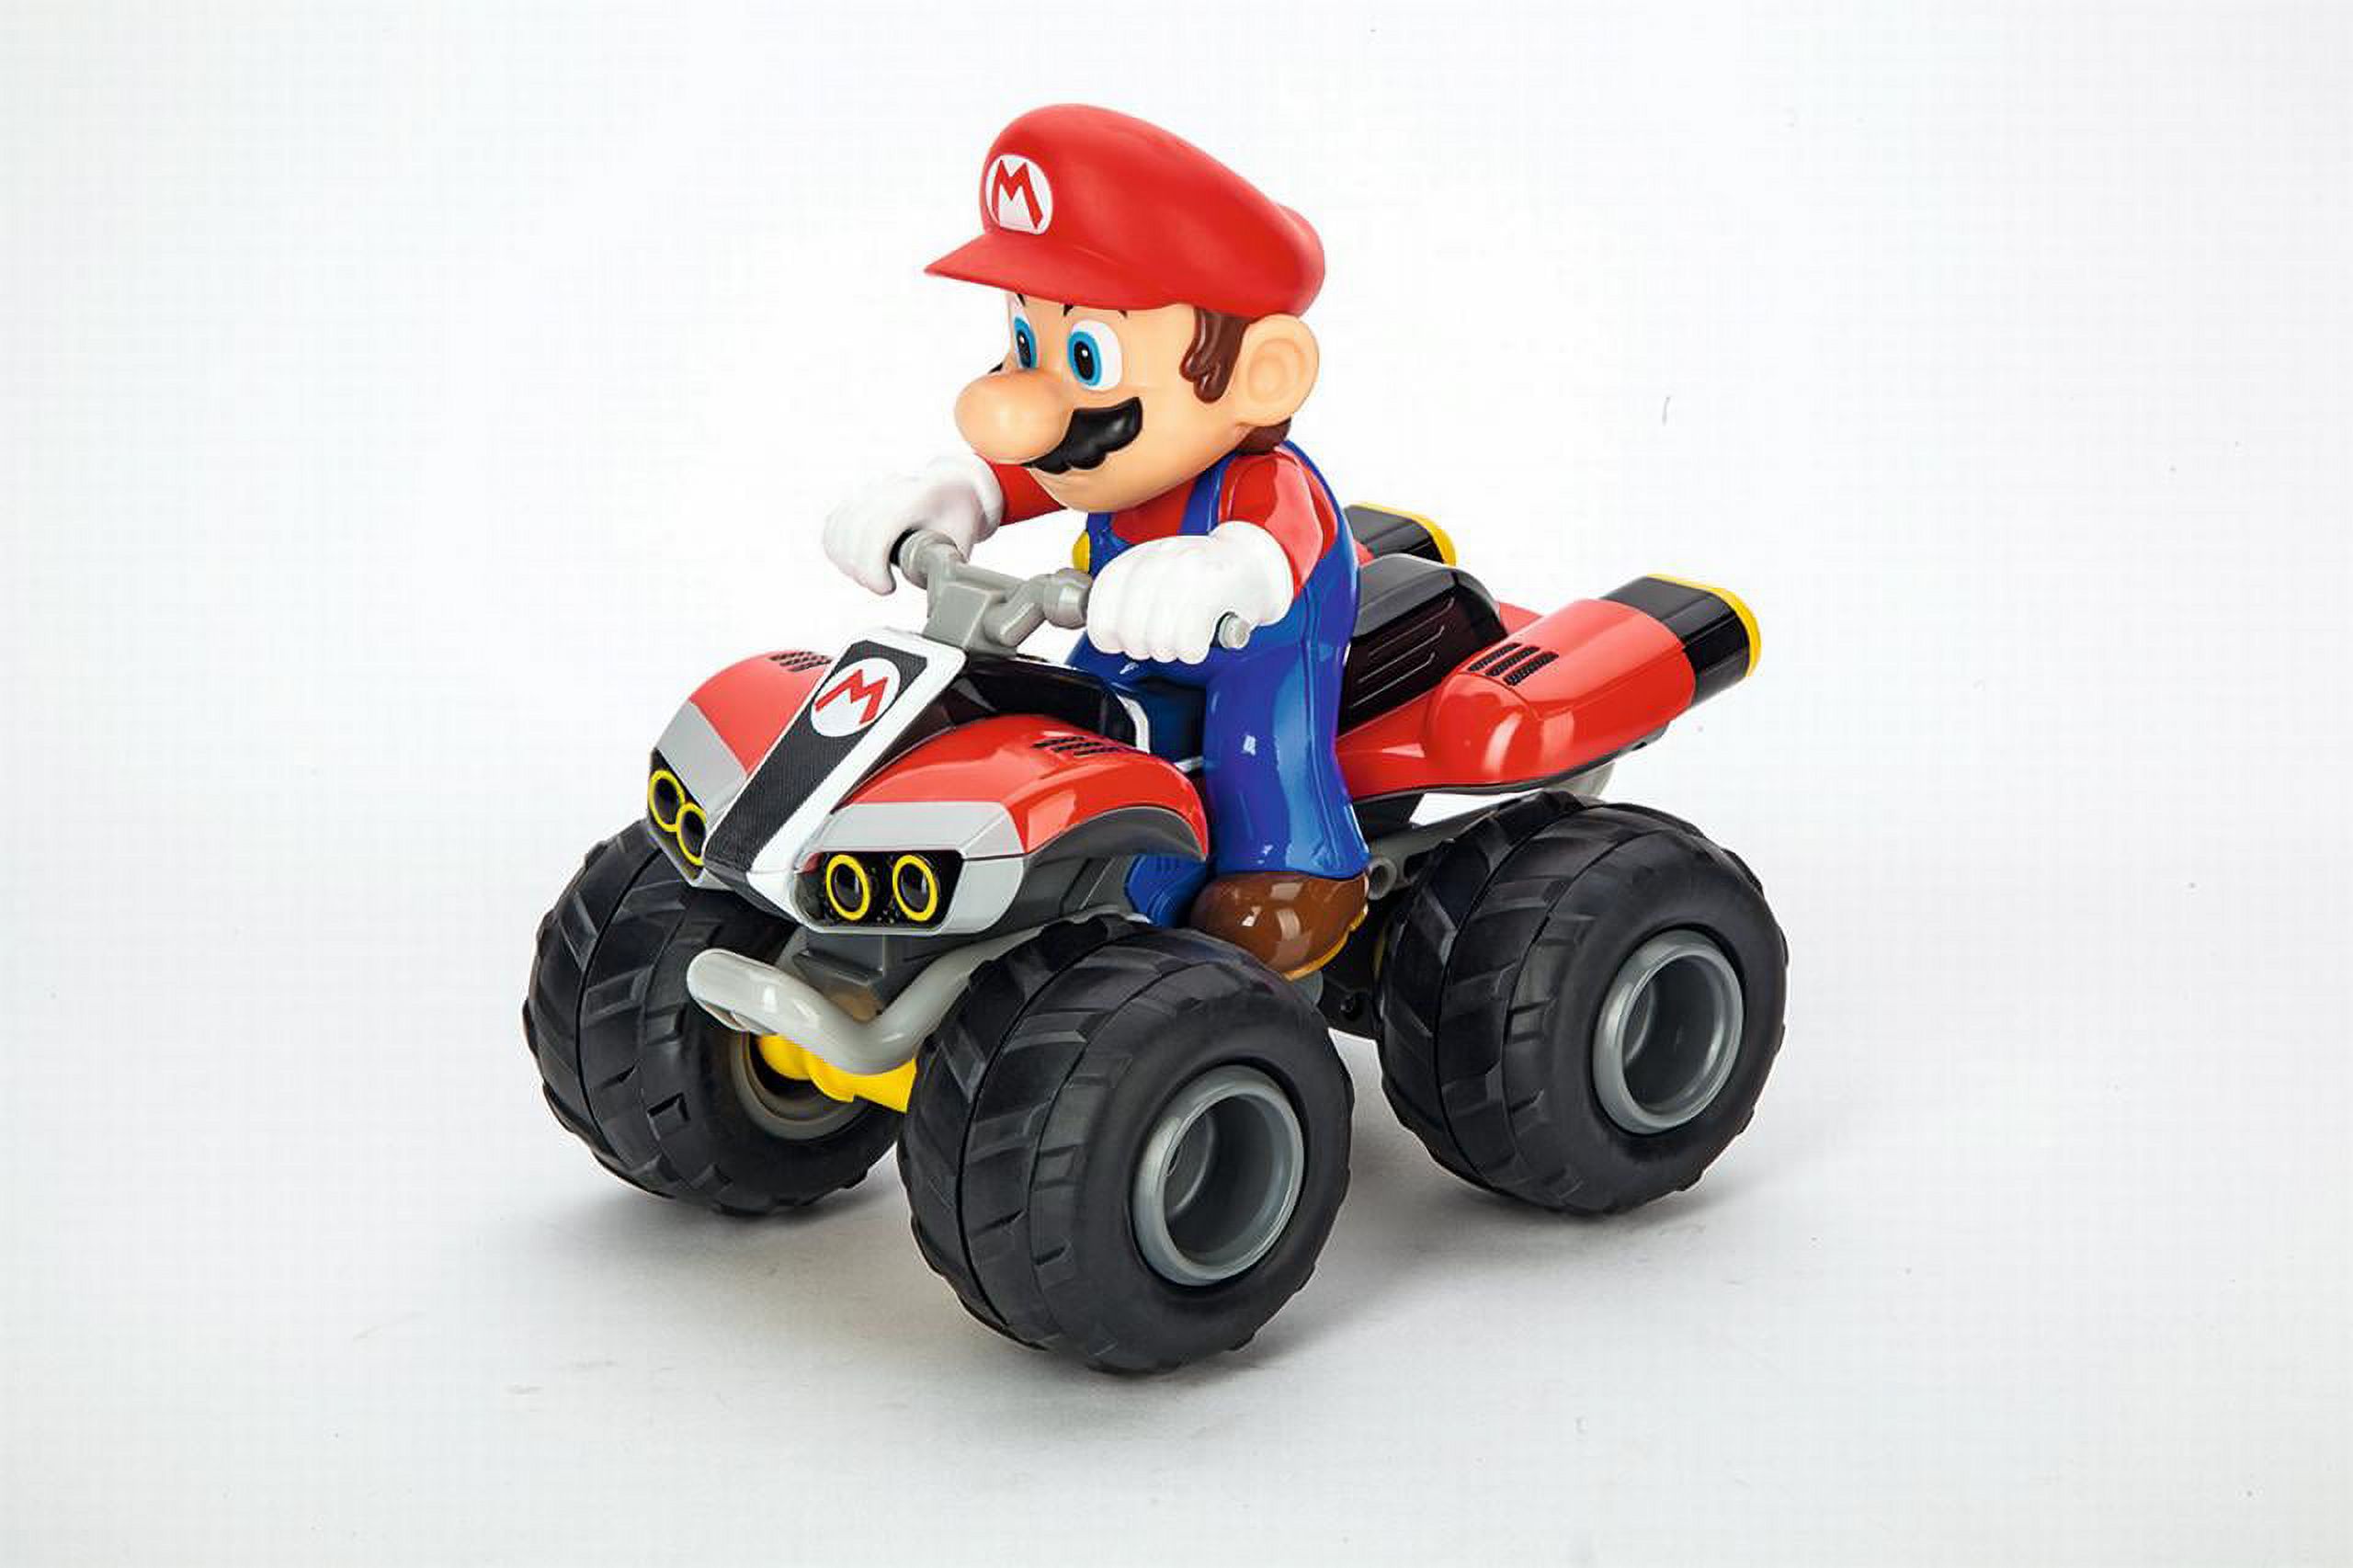 Carrera RC 2.4GHz 1:20 Scale Radio Control Toy Car Mario Kart Quad - Mario - image 2 of 9